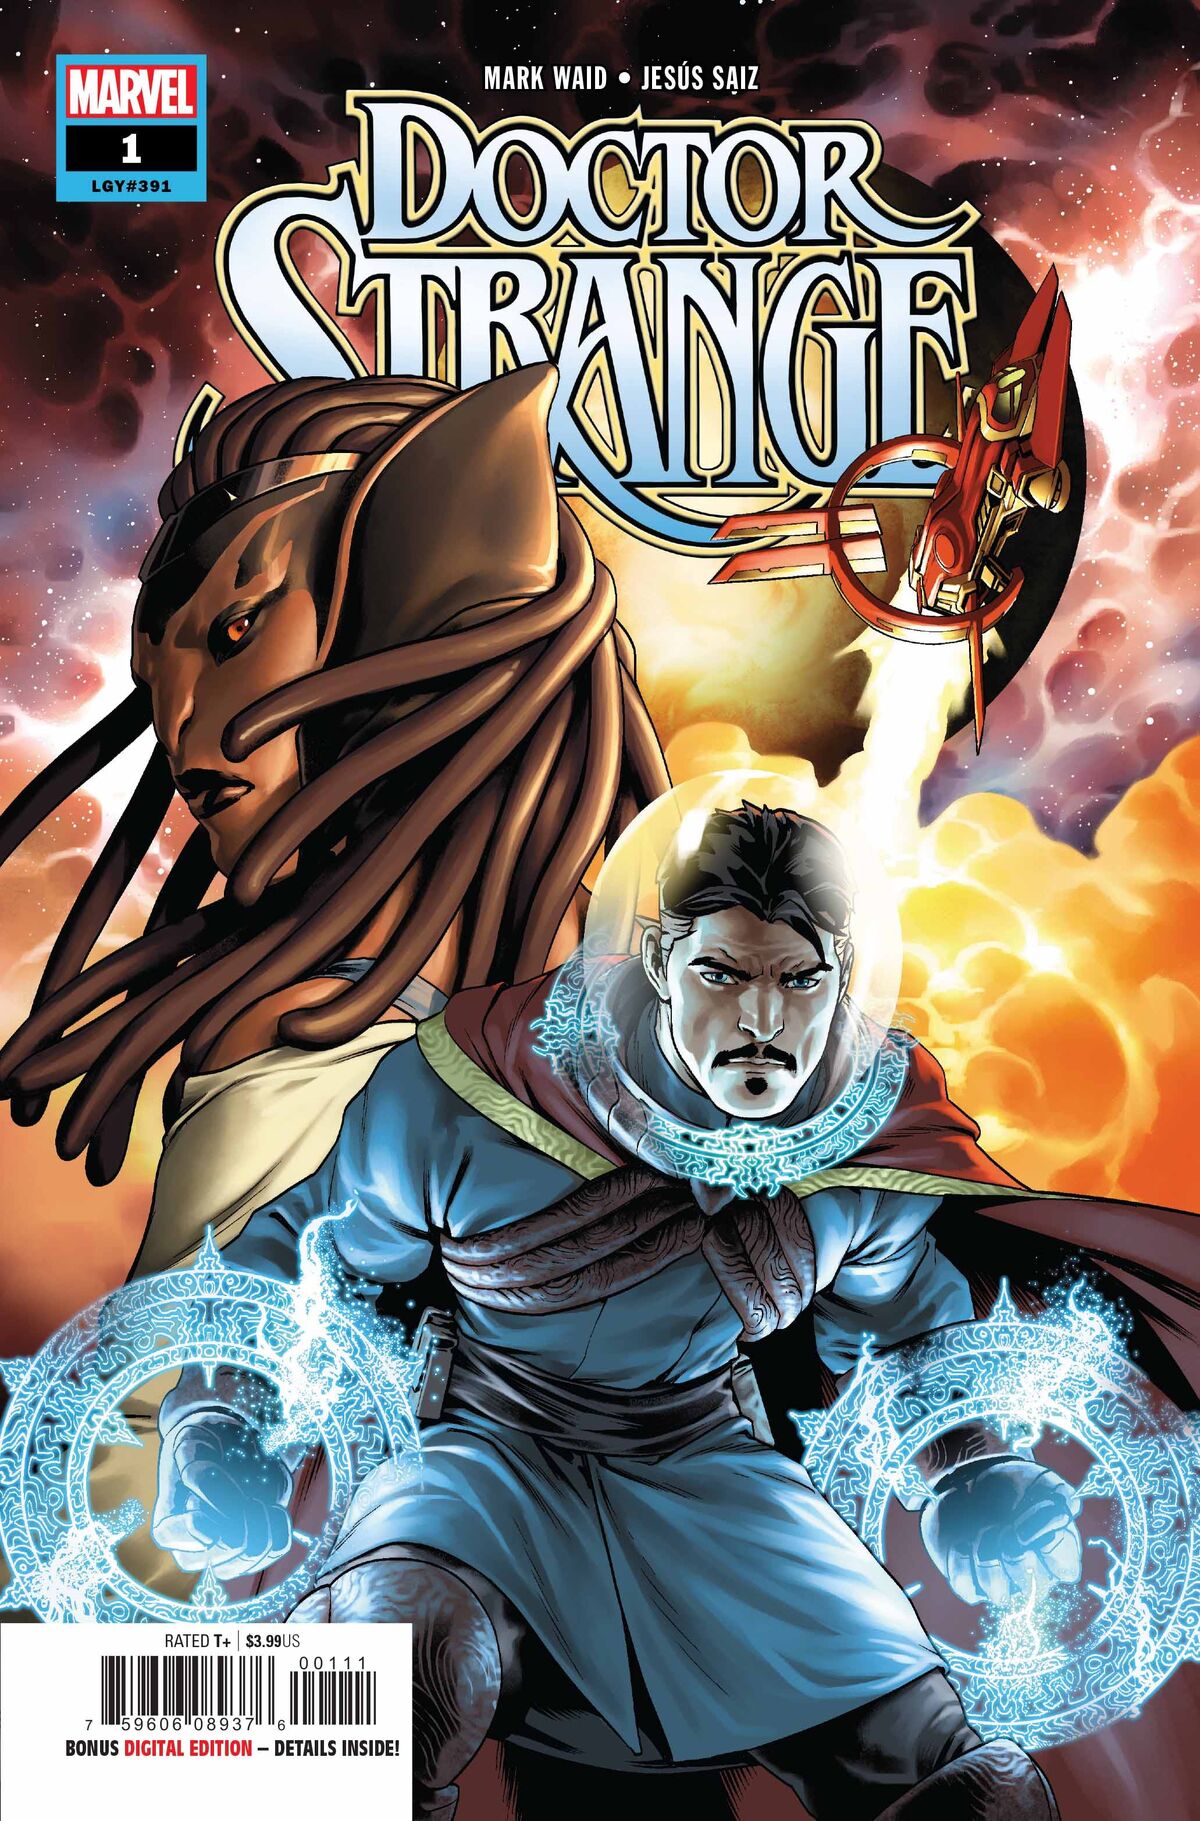 Doctor Strange (2018) #3, Comic Issues